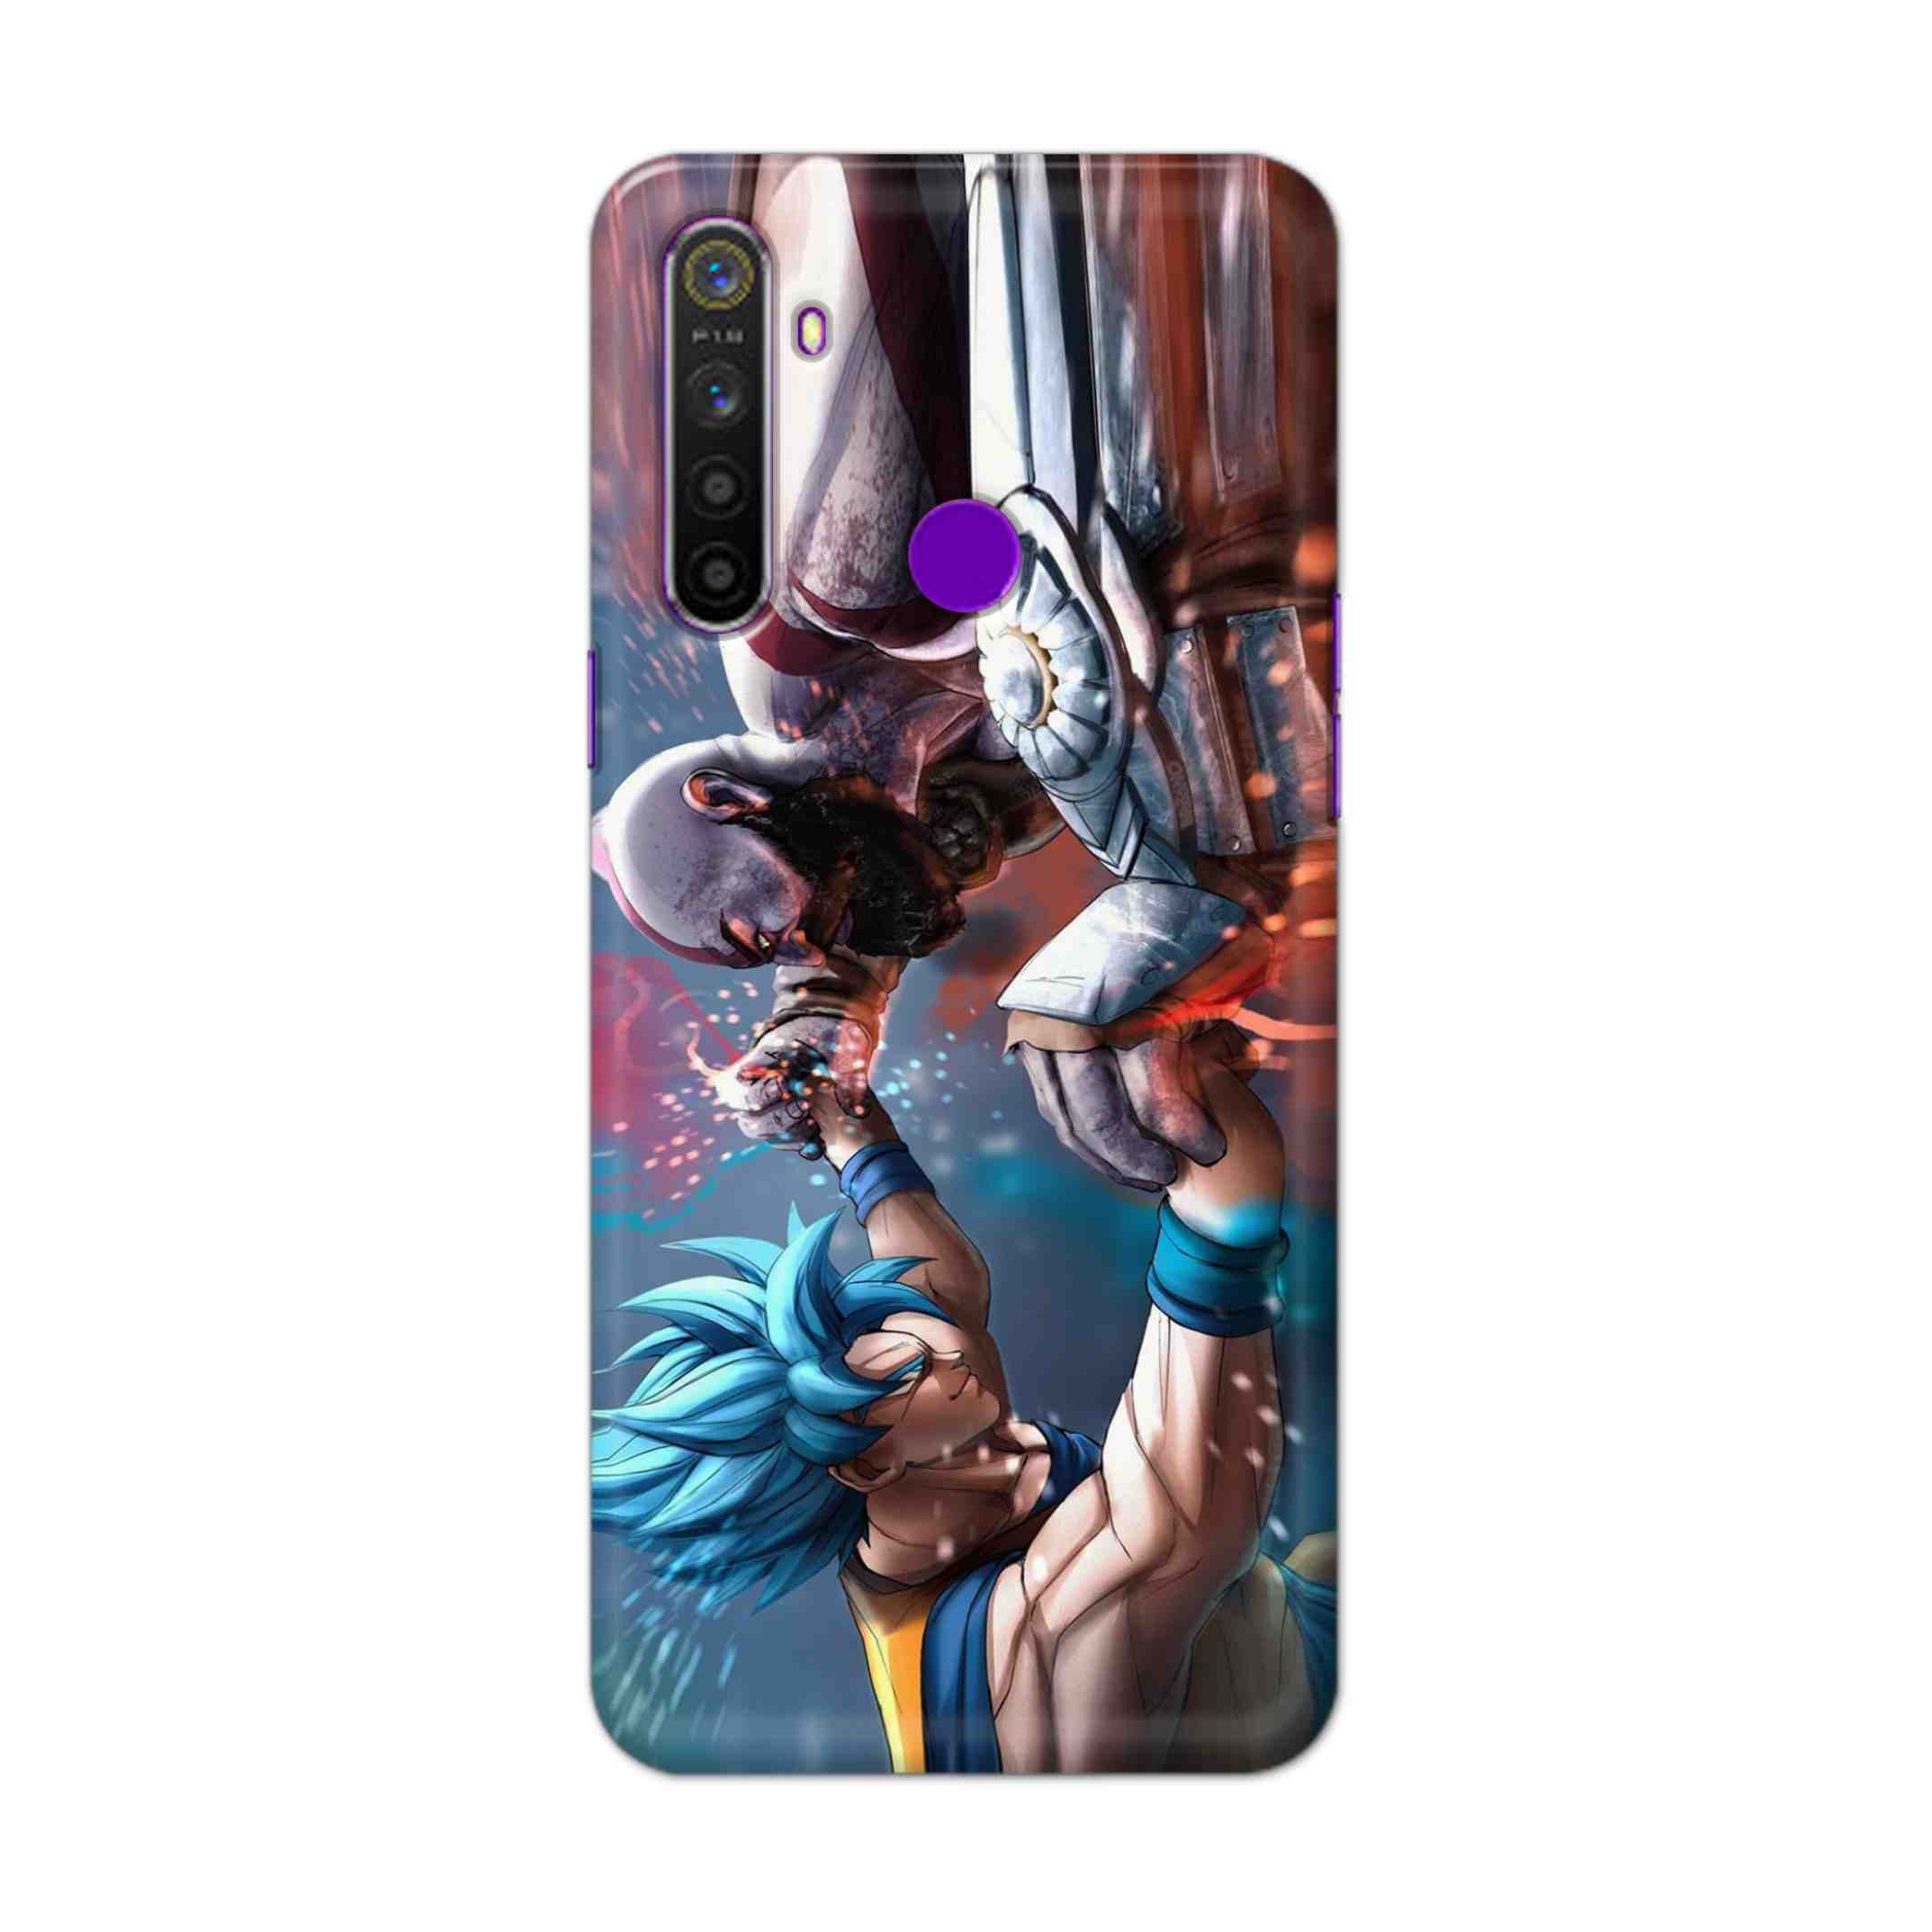 Buy Goku Vs Kratos Hard Back Mobile Phone Case Cover For Realme 5 Pro Online